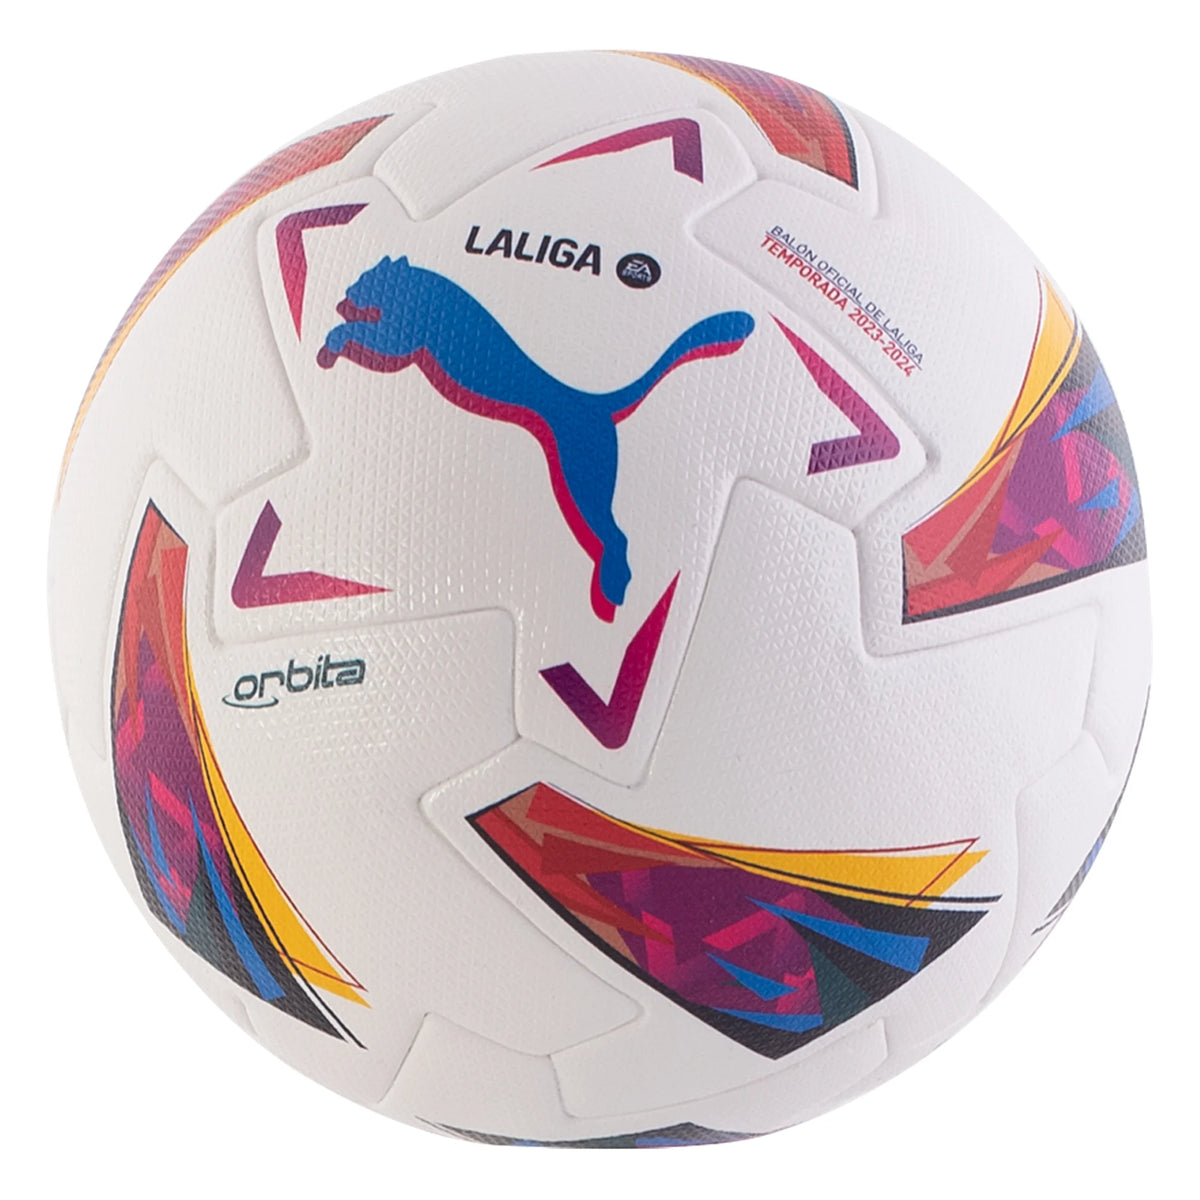 Puma Orbita La Liga FIFA Quality Pro Soccer Ball 23/24 - Yellow